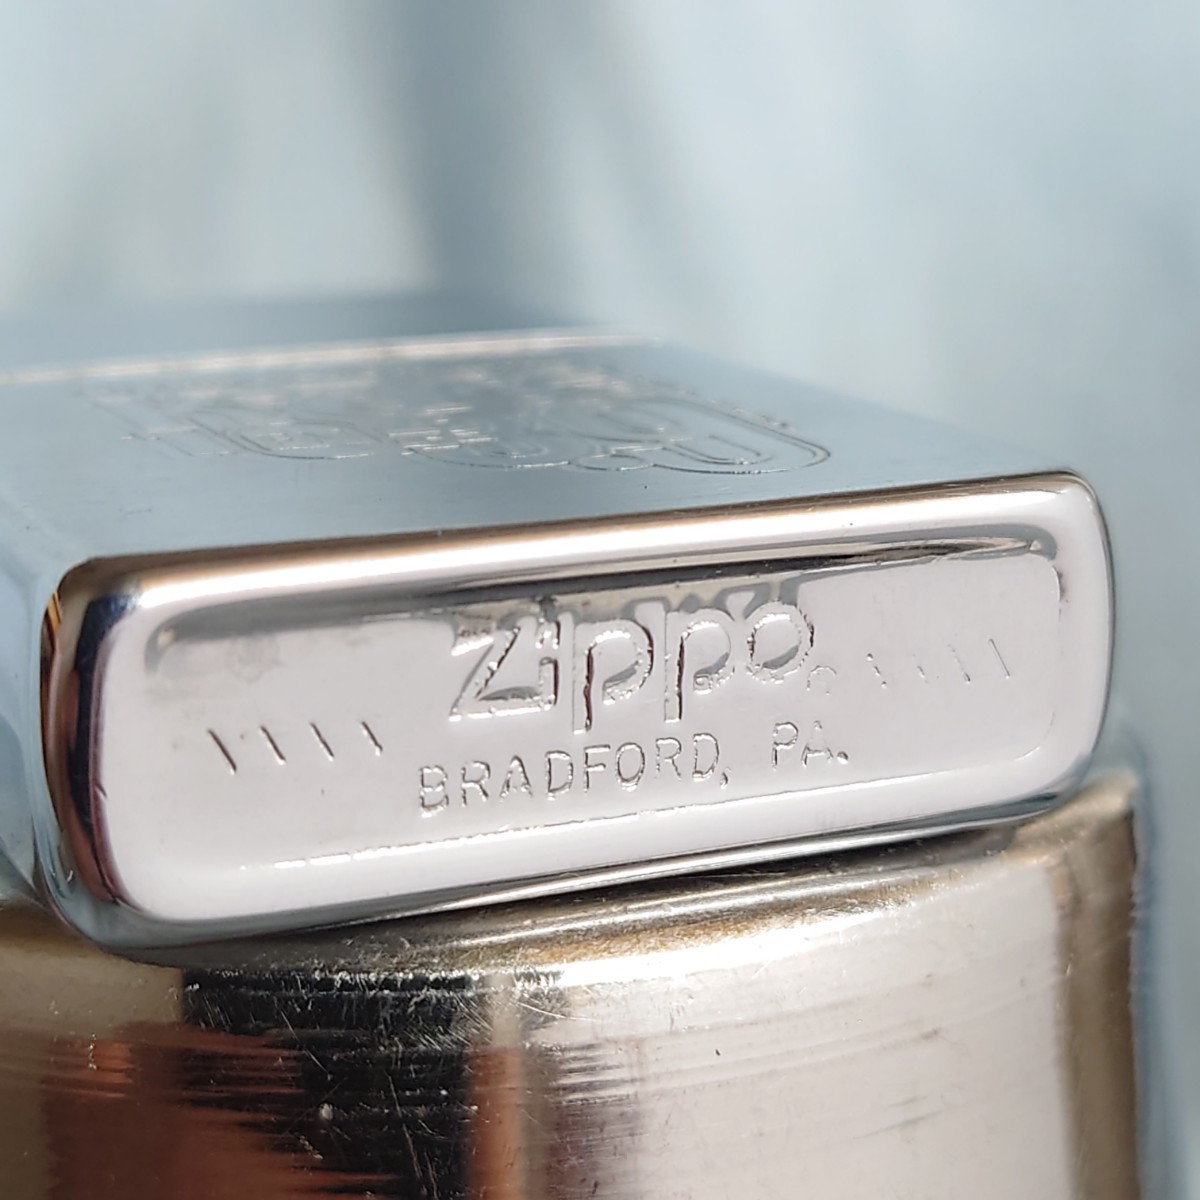 Yahoo!オークション -「80年 zippo」(Zippo) (ライター)の落札相場